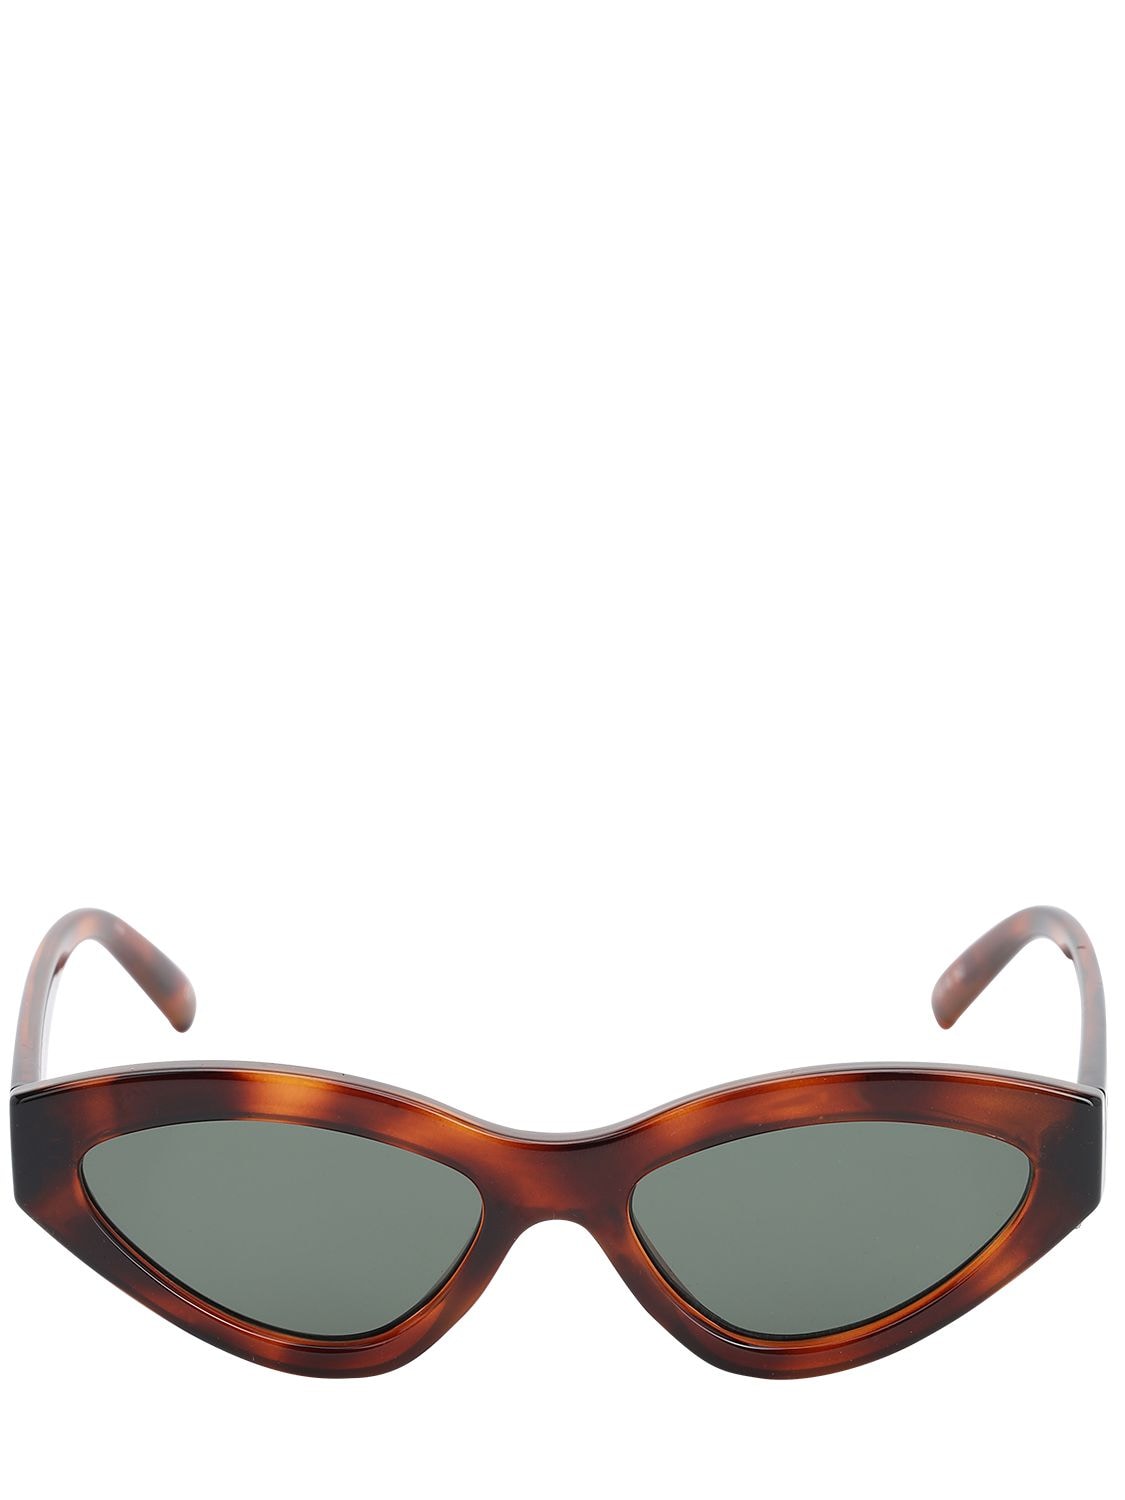 Le Specs Synthcat Cat-eye Acetate Sunglasses In Tortoiseshell